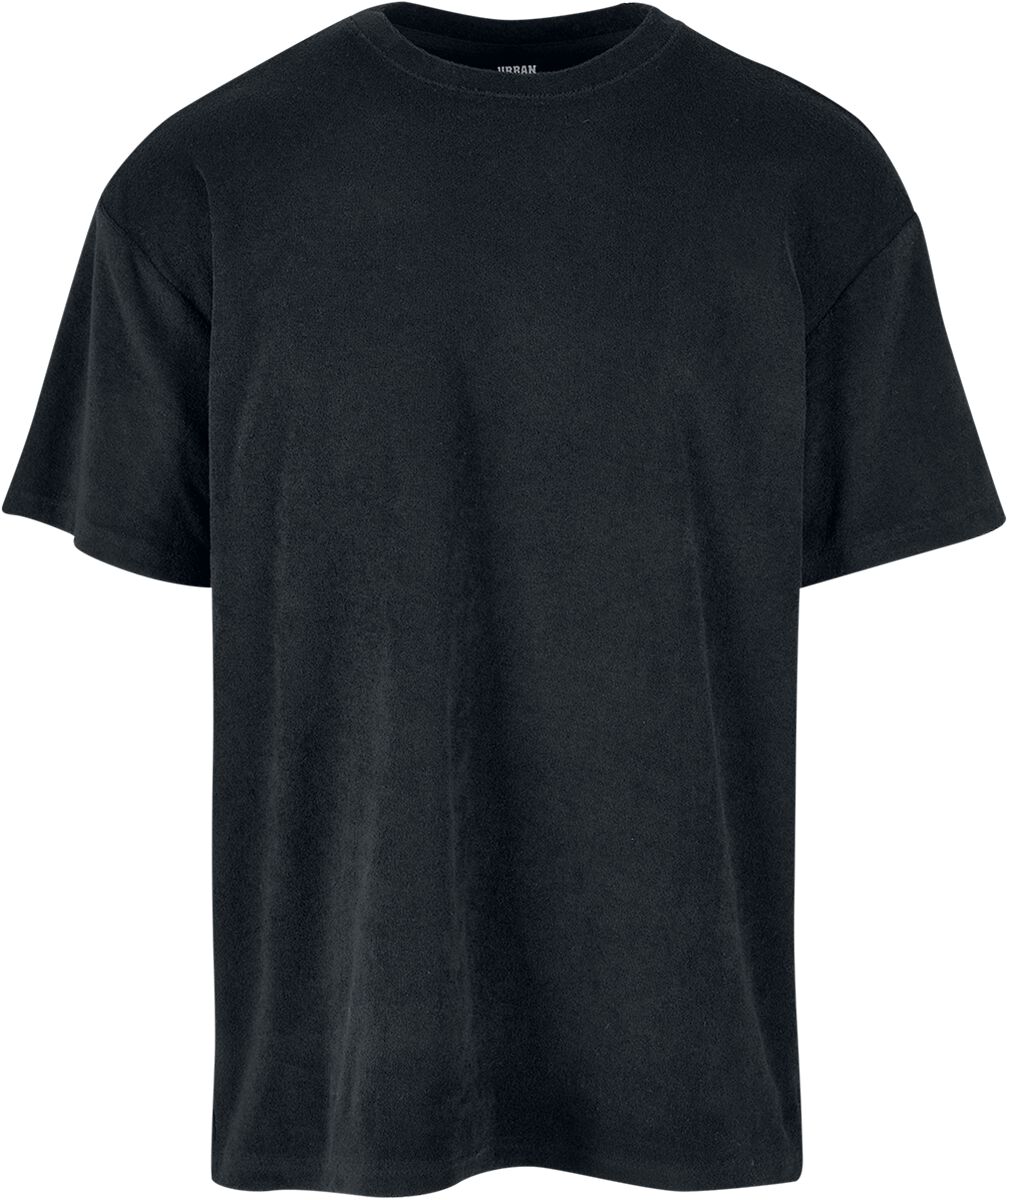 Image of T-Shirt di Urban Classics - Oversized towel t-shirt - S a XL - Uomo - nero